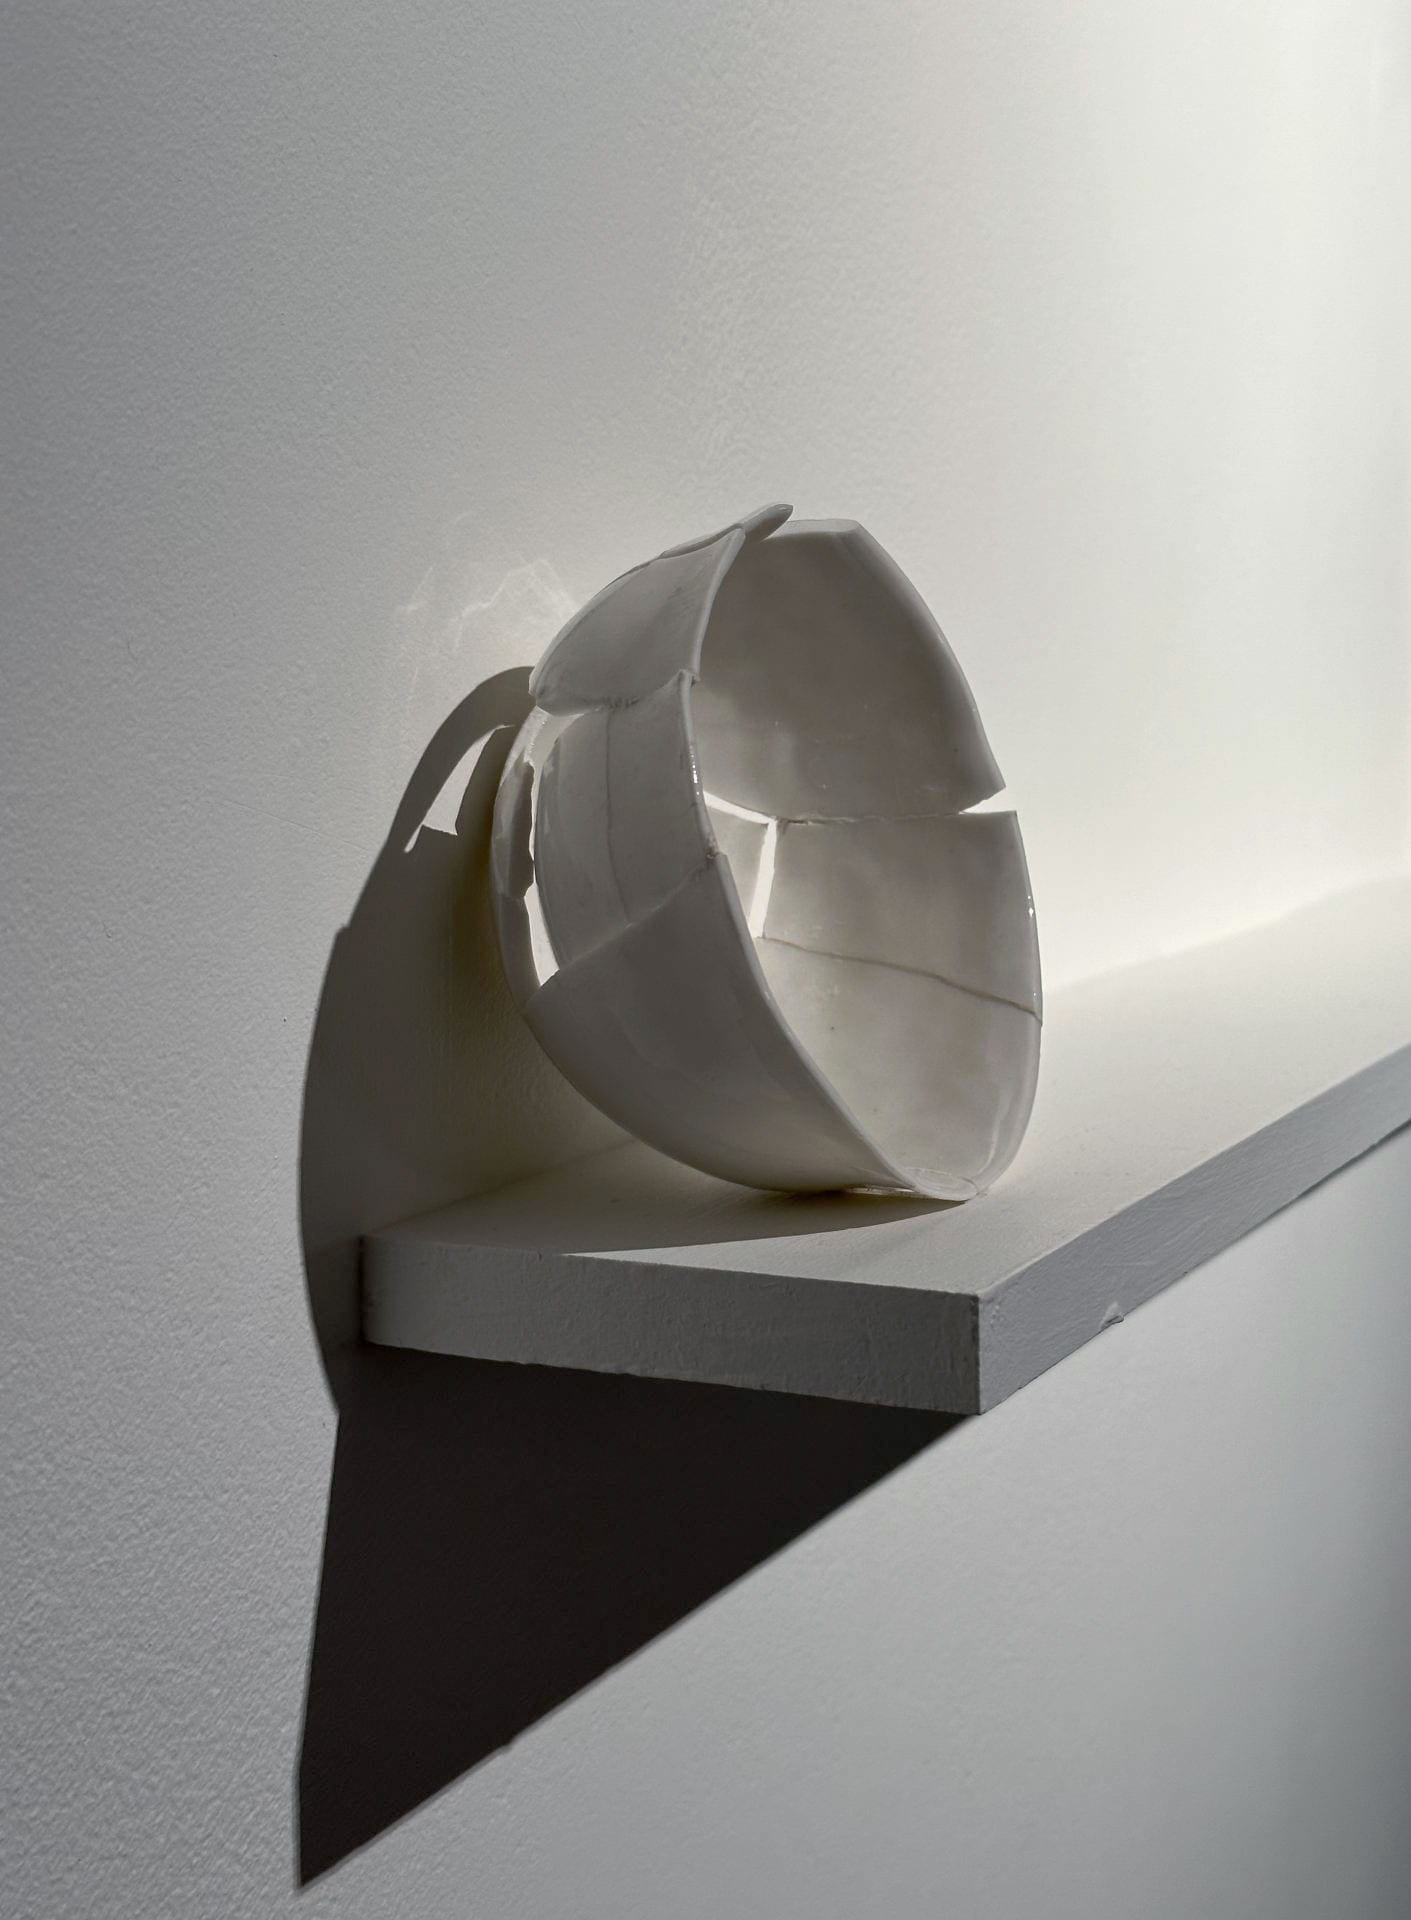 Chiara Zeta, 'Shattered" 2023, detail (installation view), broken porcelain bowl, flexible putty, photo Chiara Zeta